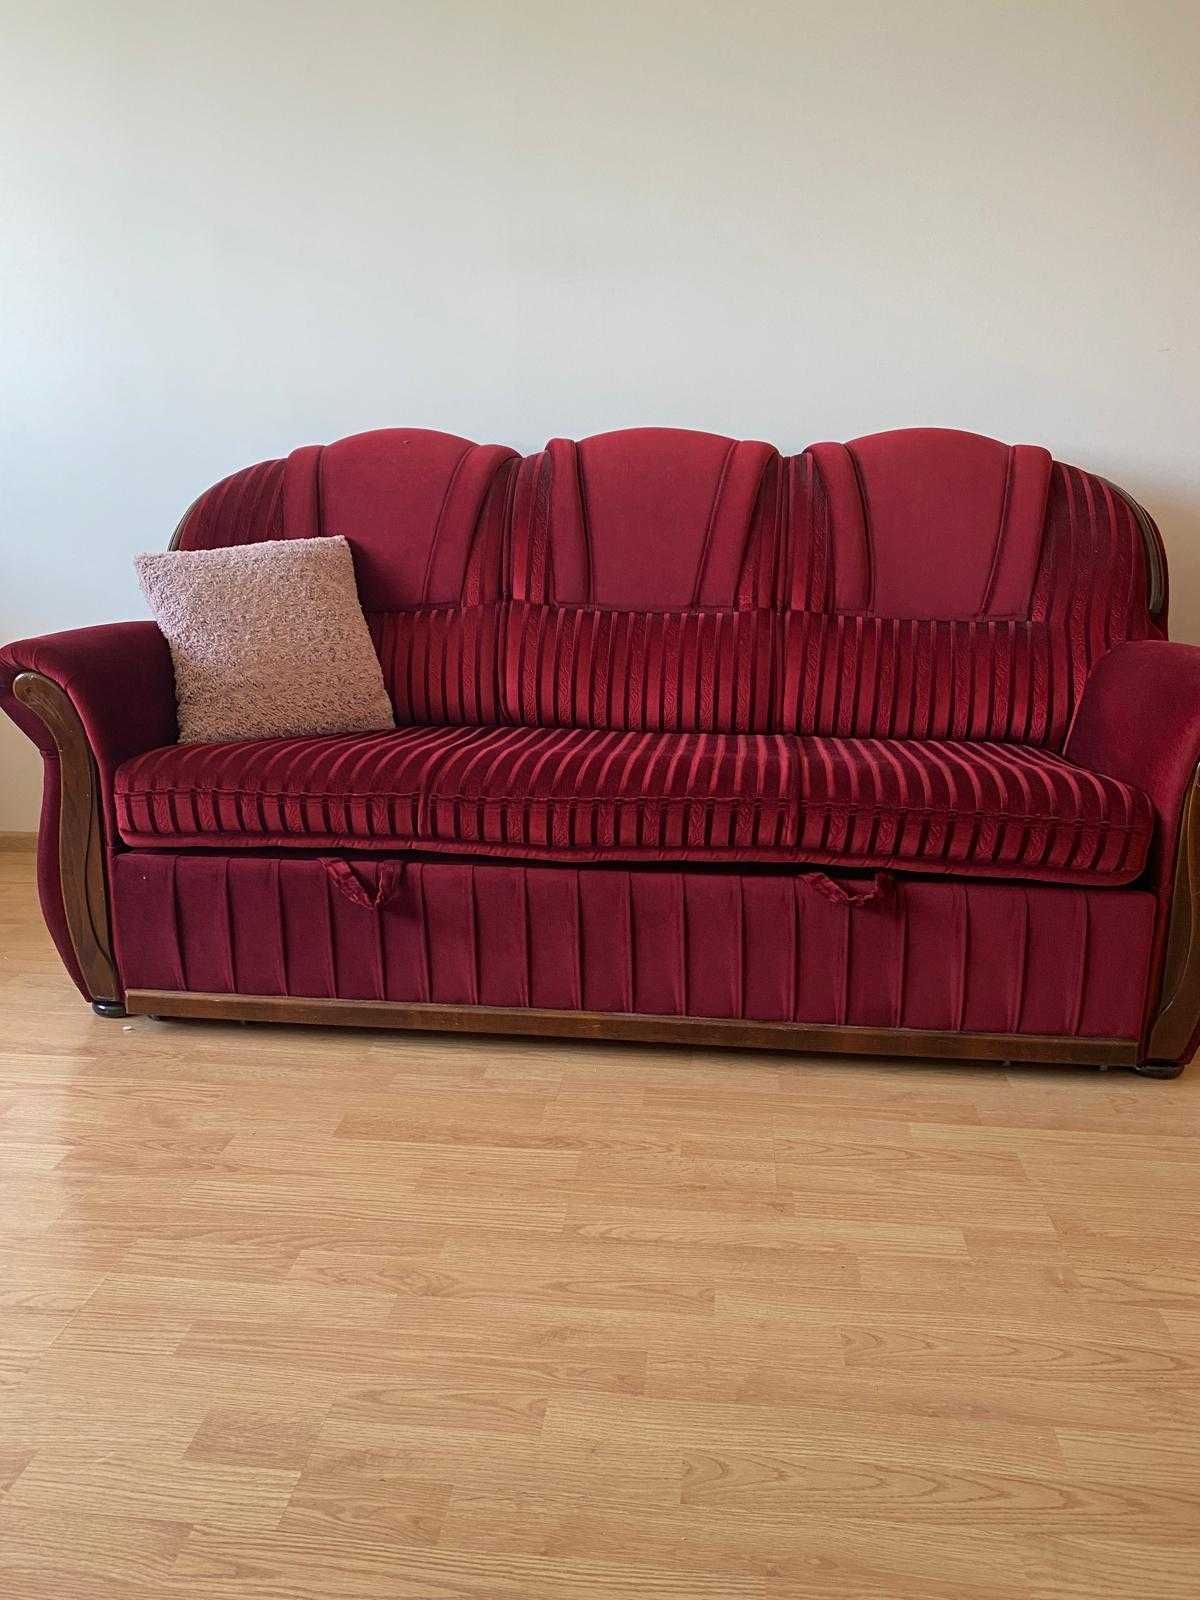 Rozkładana kanapa sofa vintage retro.